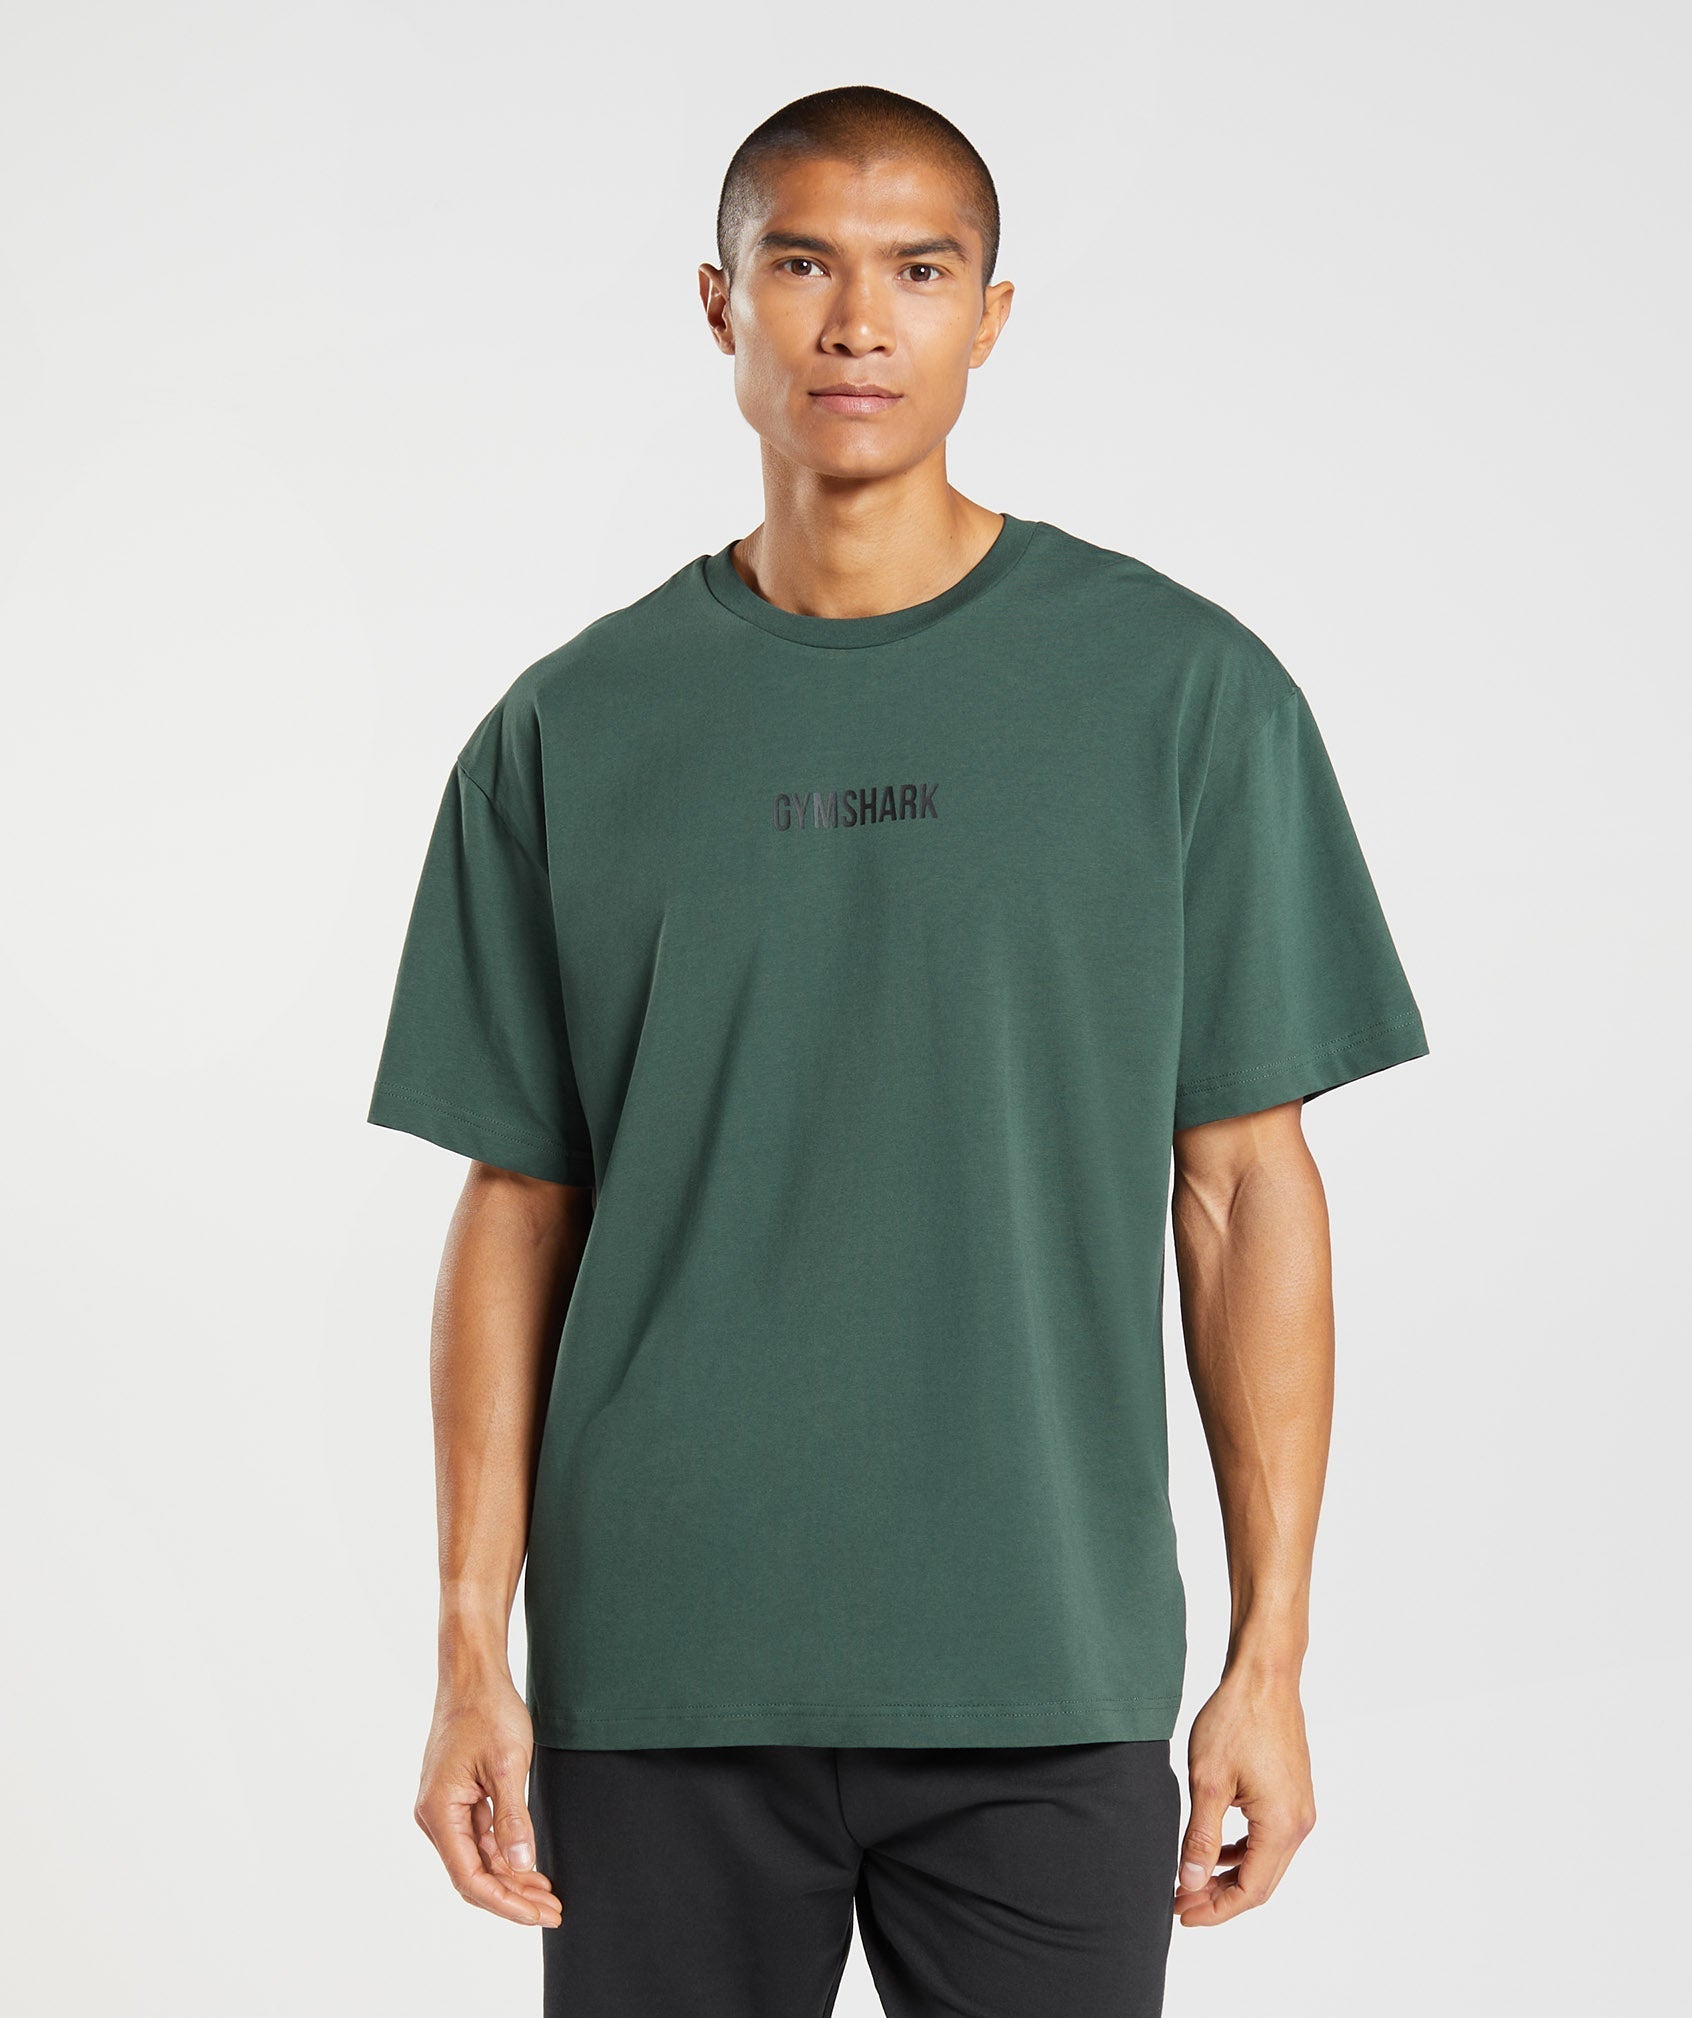 Men's Oversized T Shirts & Baggy T Shirts - Gymshark